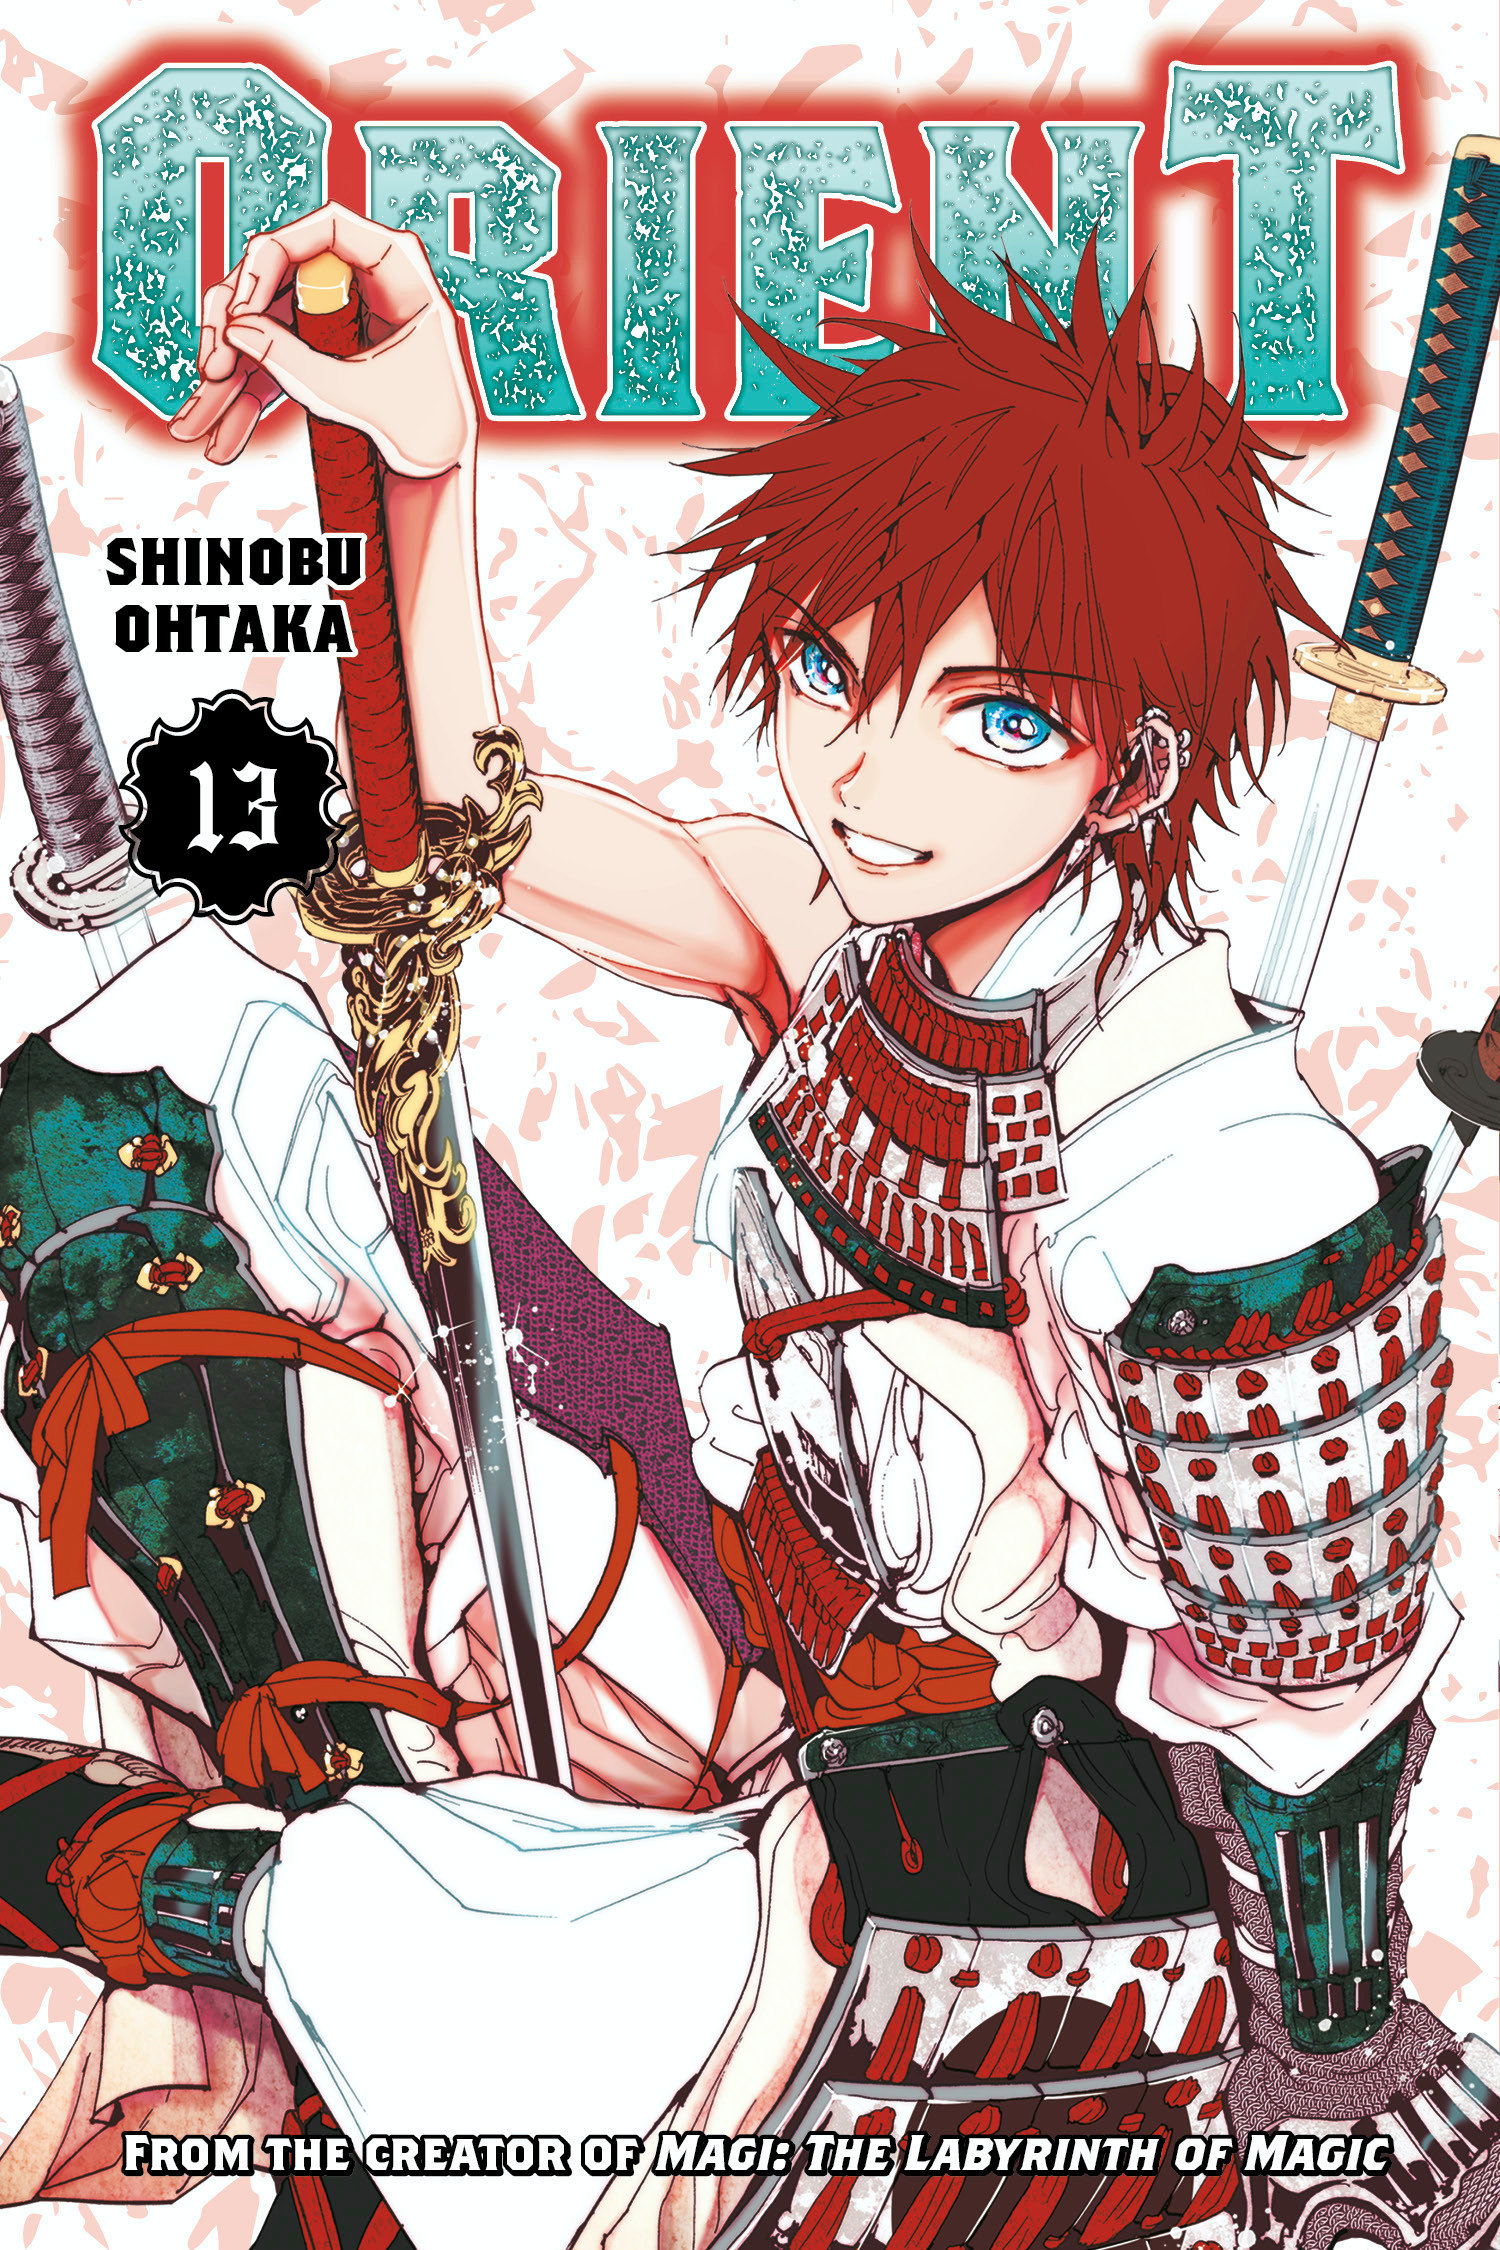 Orient Manga Volume 13